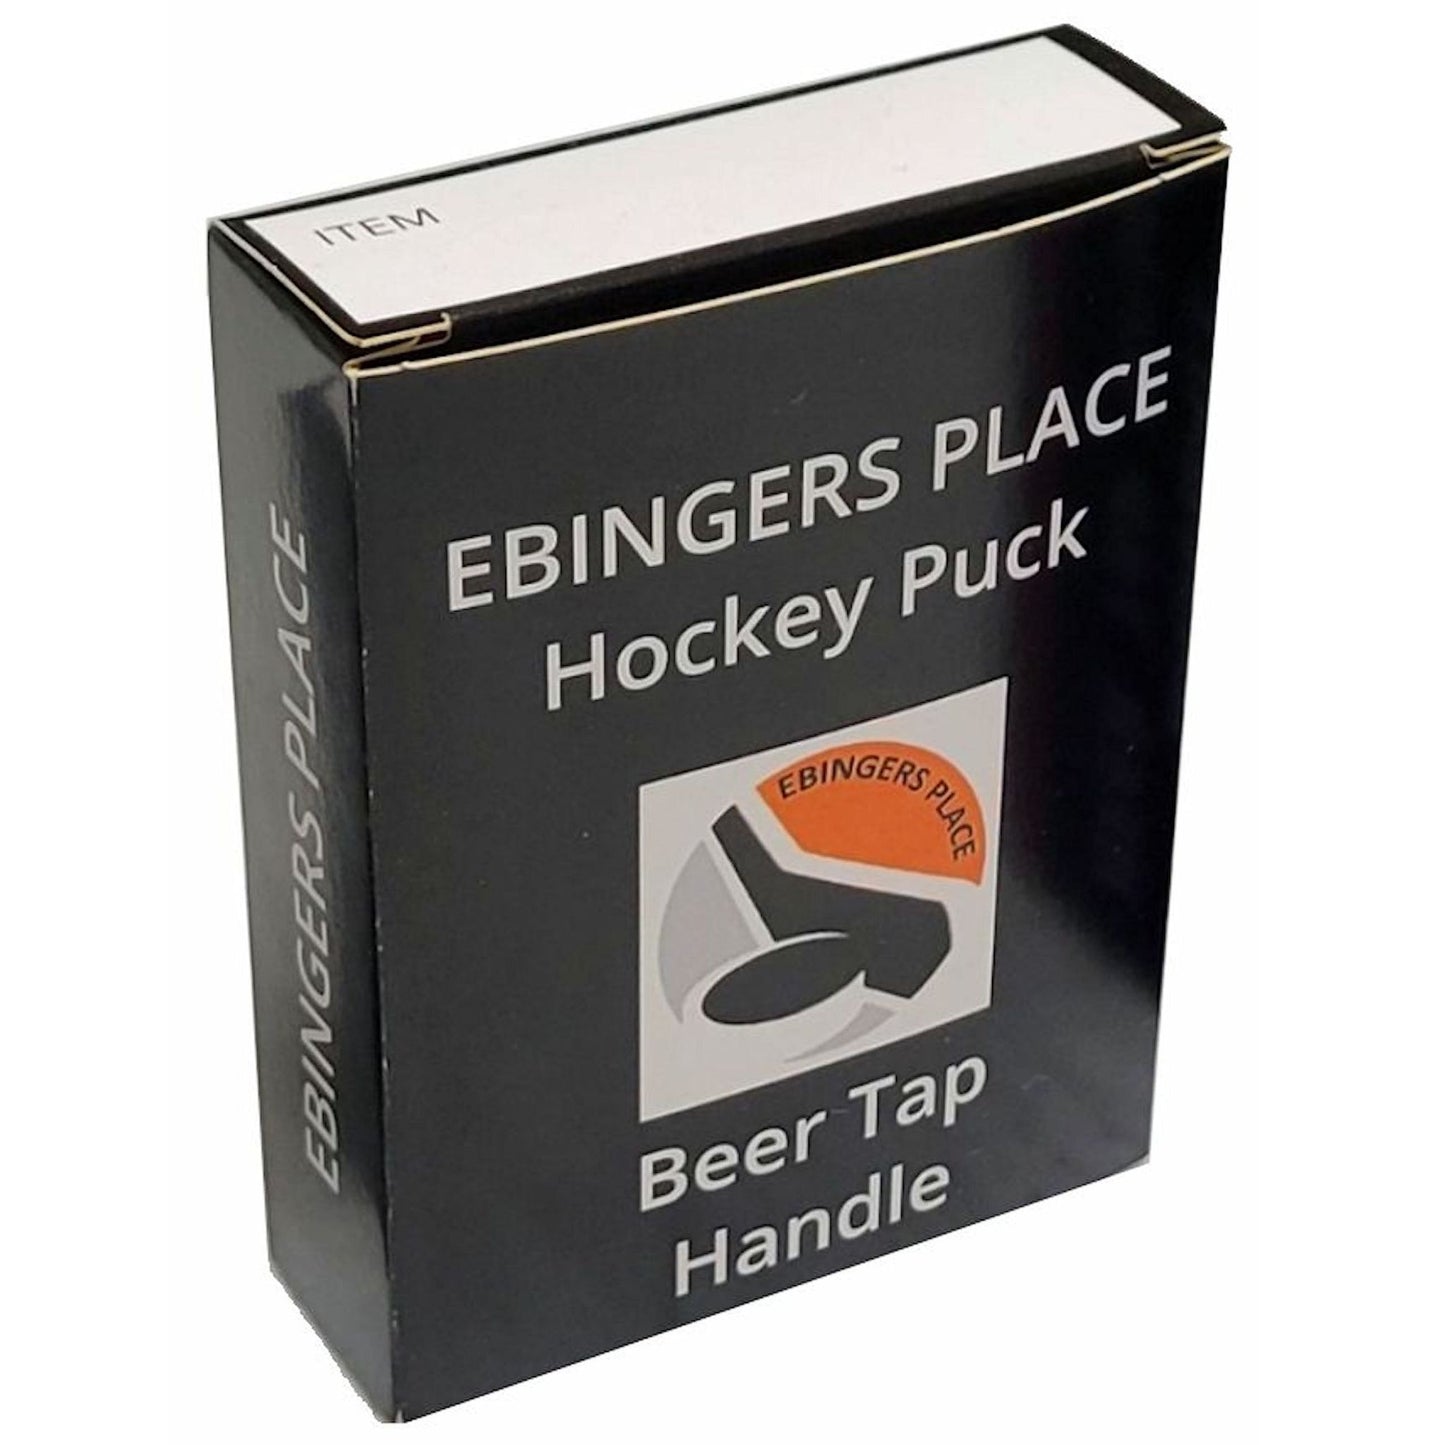 Colorado Avalanche 1996 Stanley Cup Champions Hockey Puck Beer Tap Handle